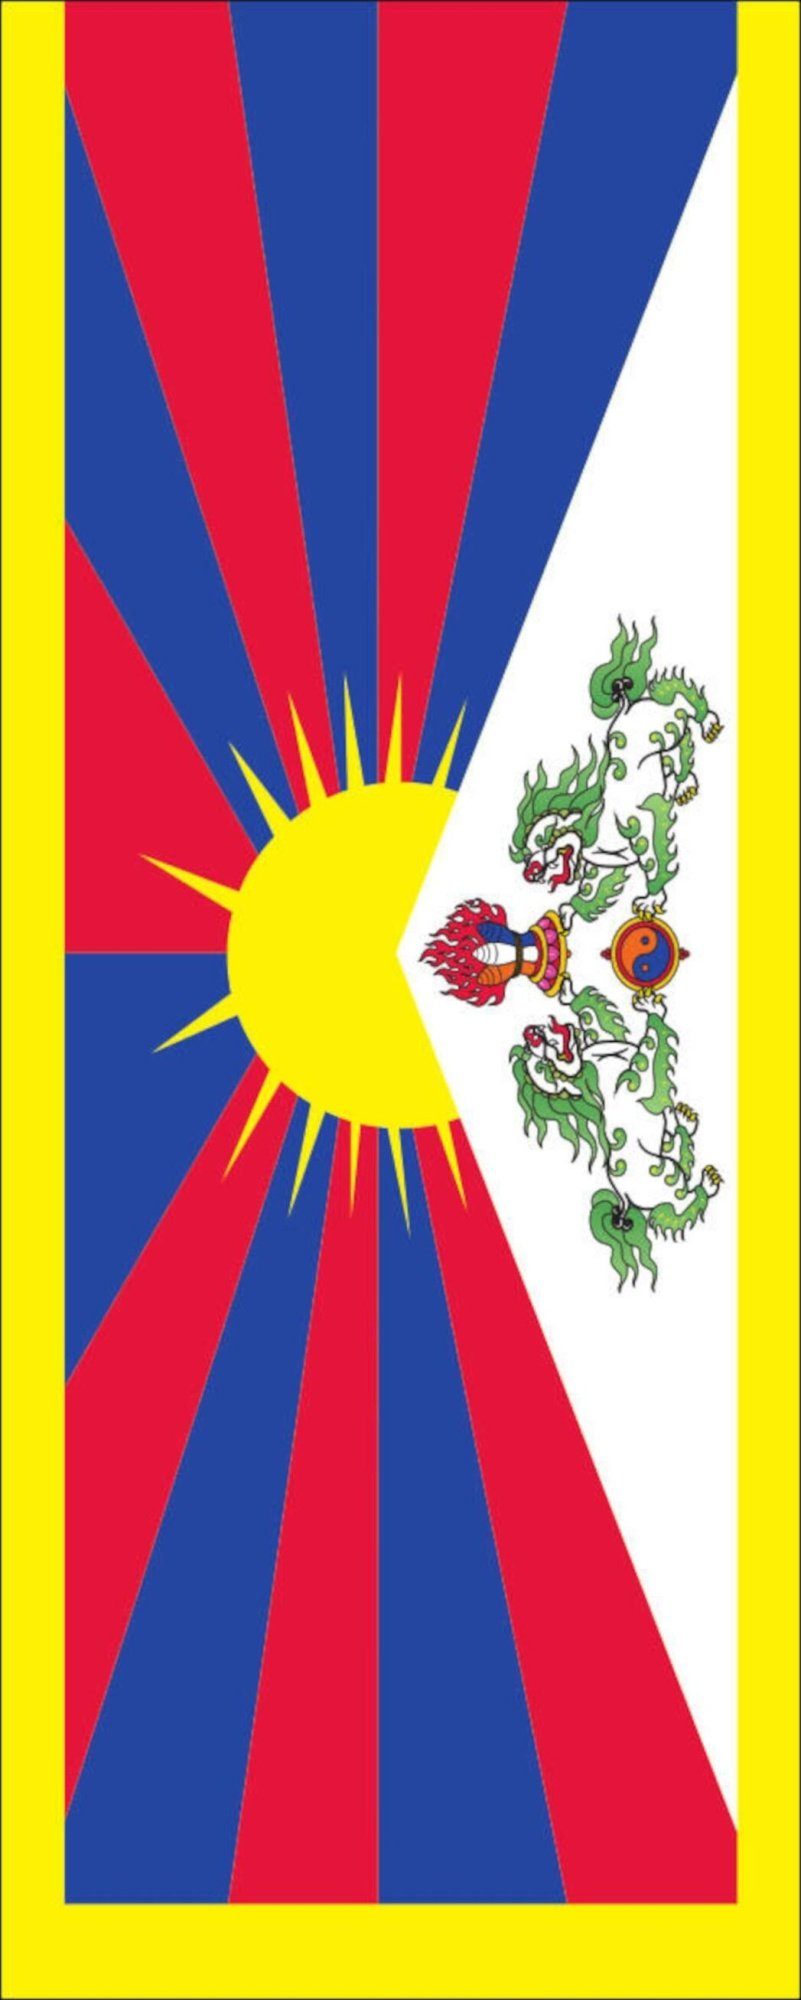 flaggenmeer Flagge Flagge Tibet 110 g/m² Hochformat